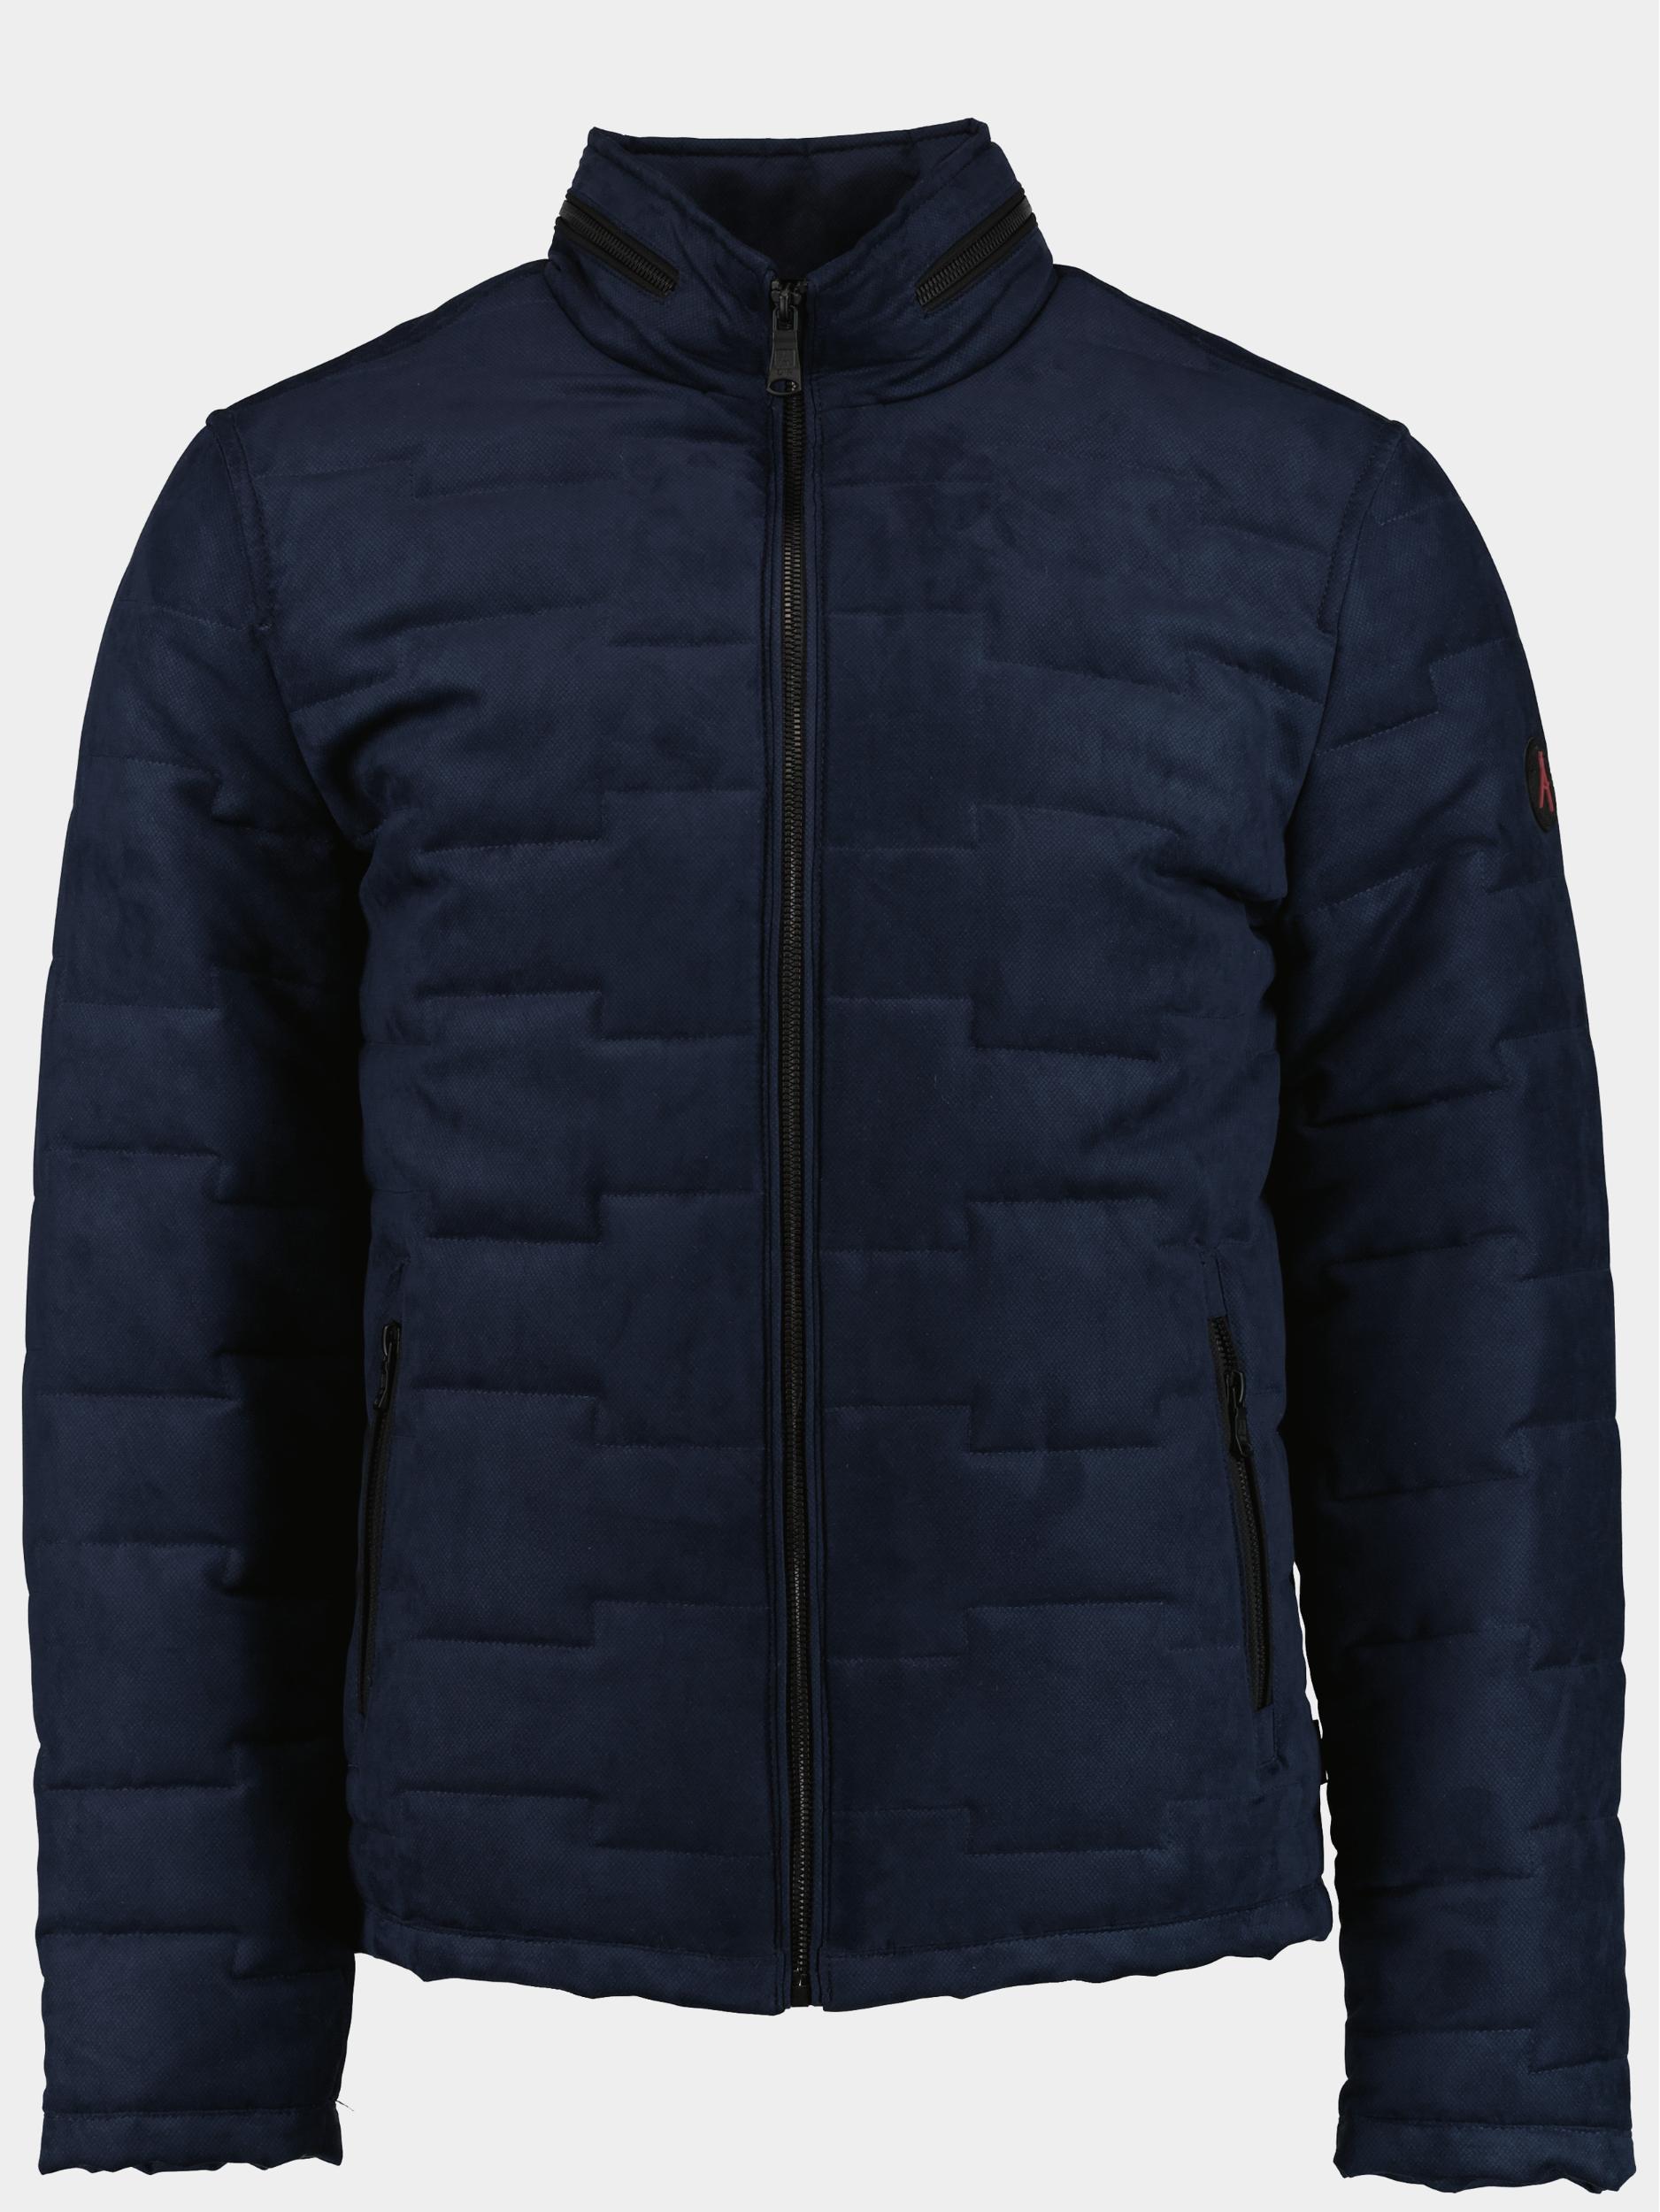 Donders 1860 Winterjack Blauw Textile jacket 21837/780